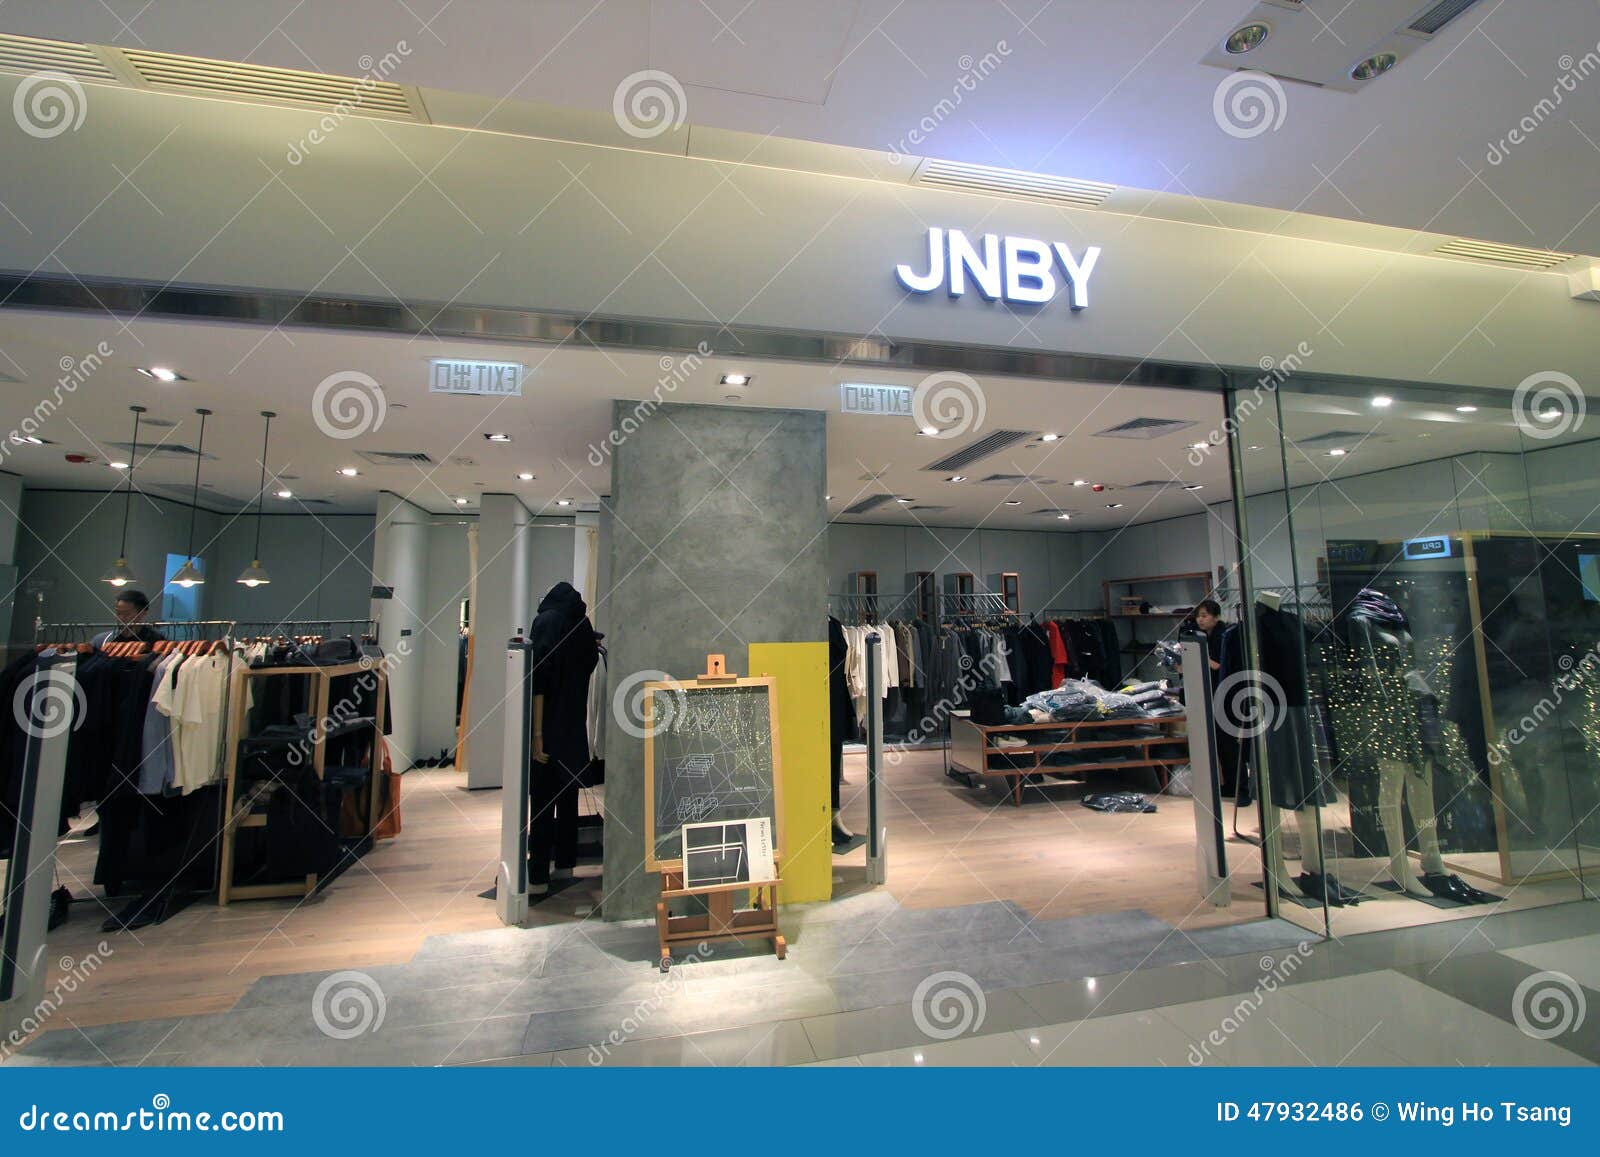 Jnby shop in hong kong editorial photo. Image of longchamp - 47932486